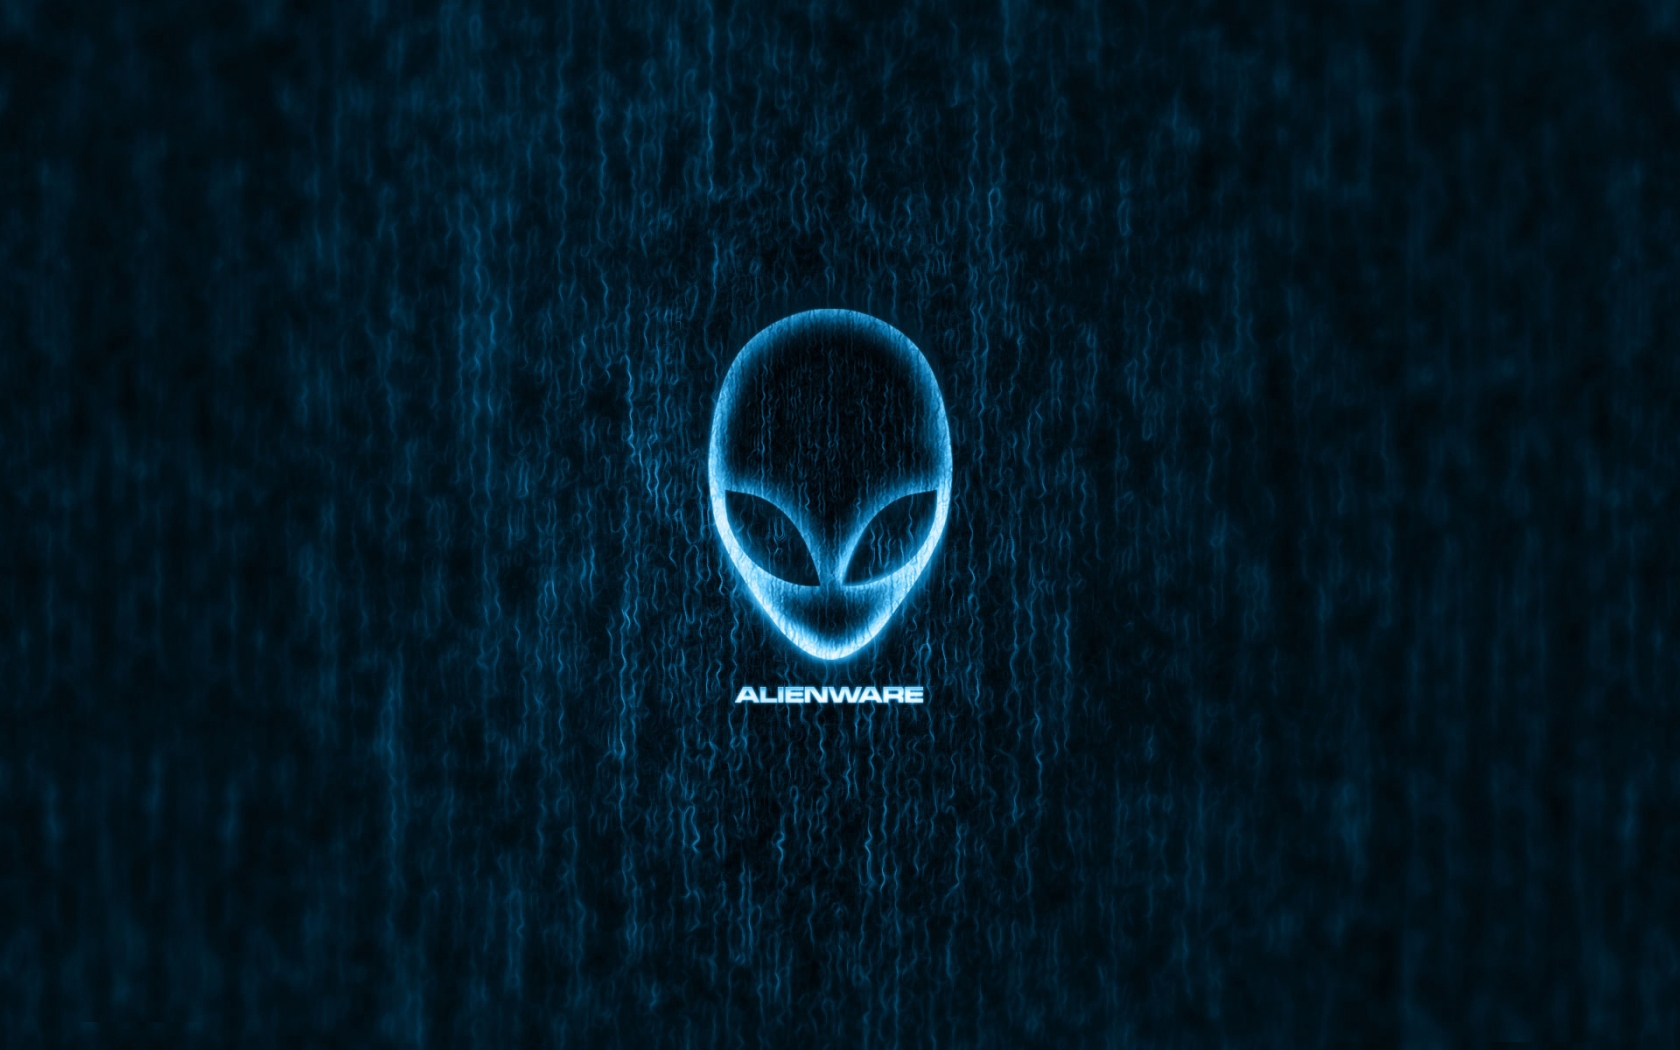 Alienware Company Logo for 1680 x 1050 widescreen resolution